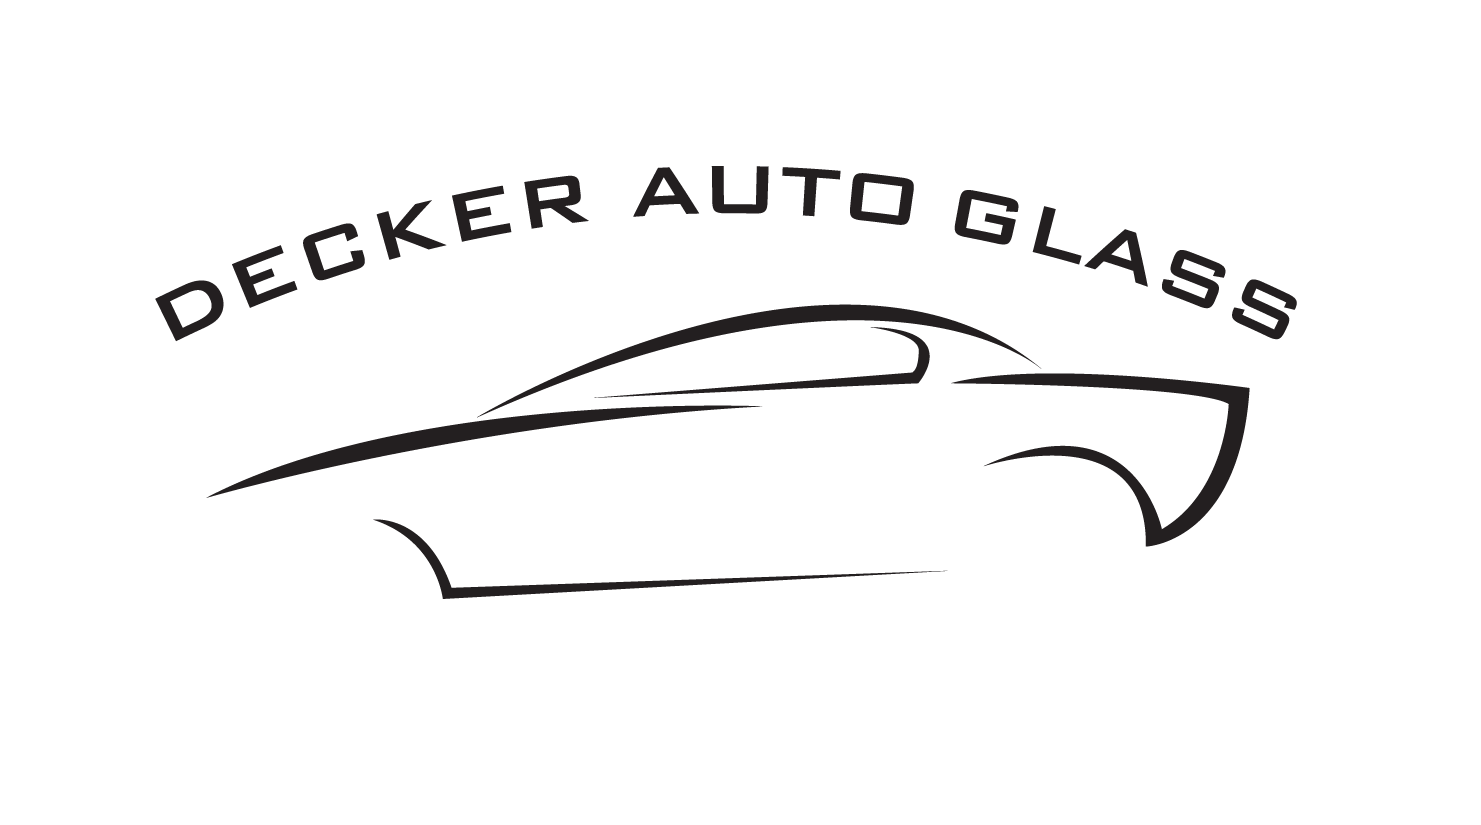 Business logo of Decker Auto Glass